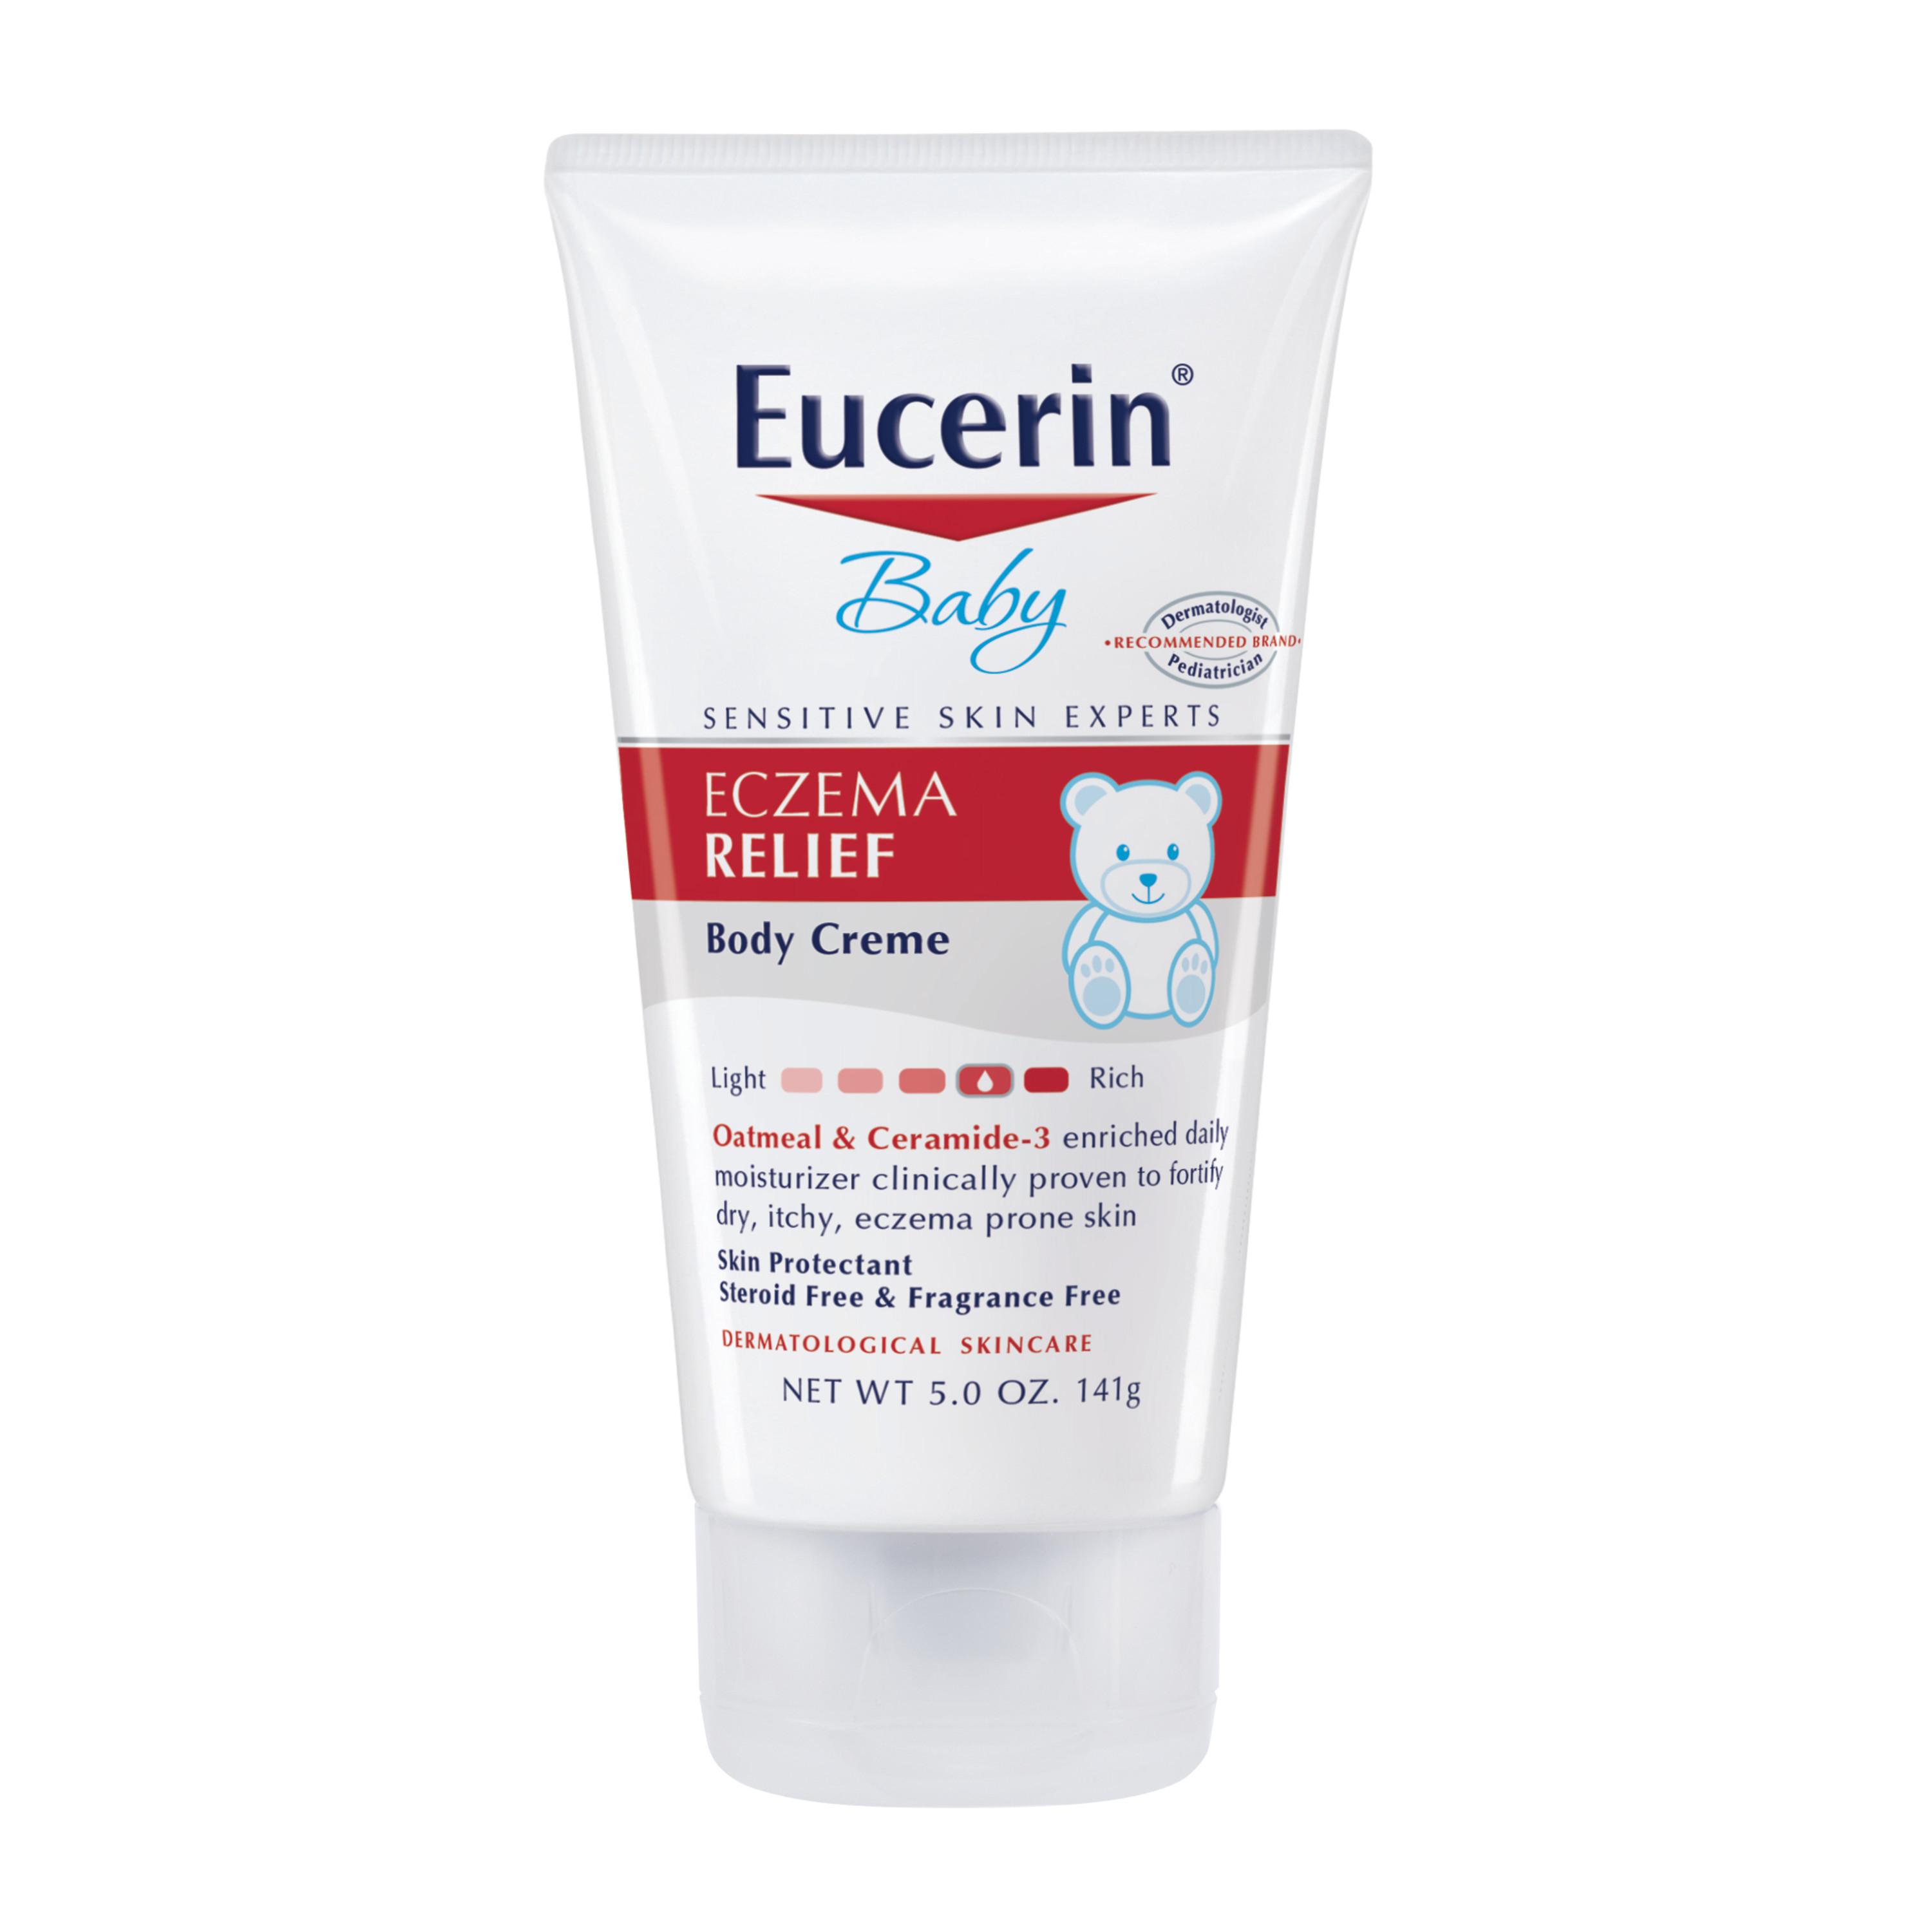 Eucerin Baby Eczema Relief Body Creme [Exp: 08/2022]